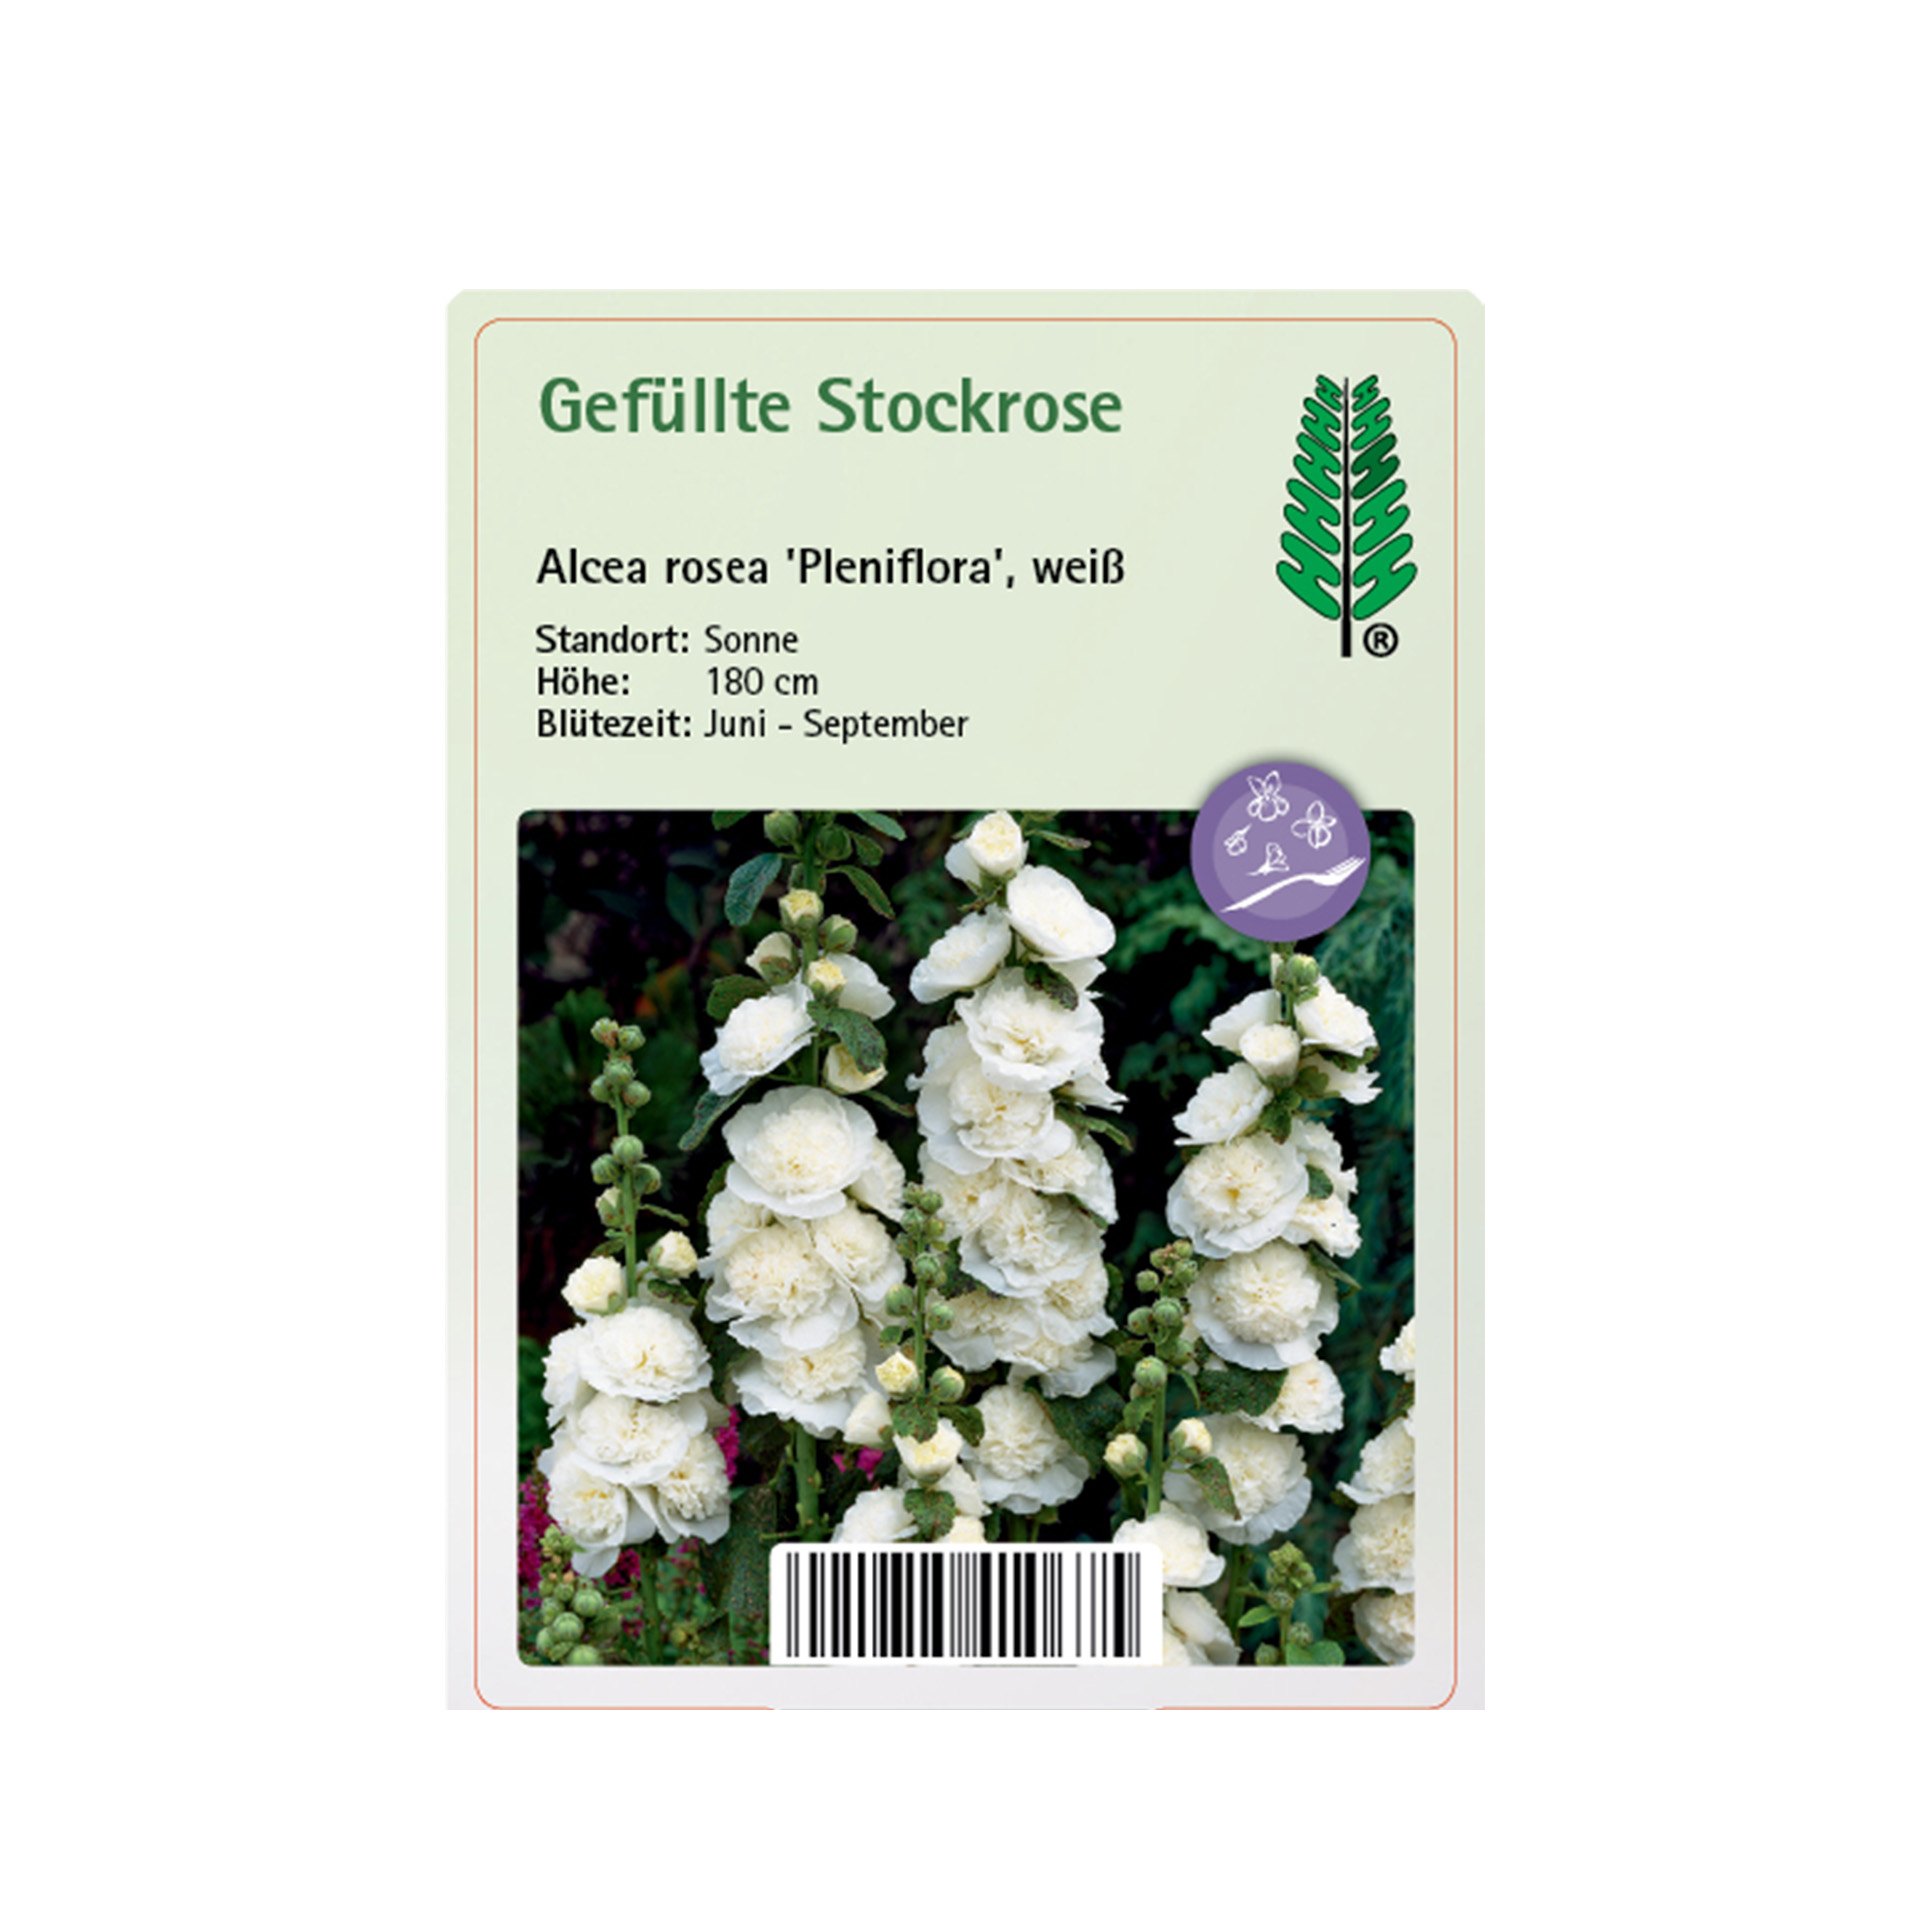 Gefüllte Stockrose - Alcea rosea 'Pleniflora' weiß, 11cm Topf